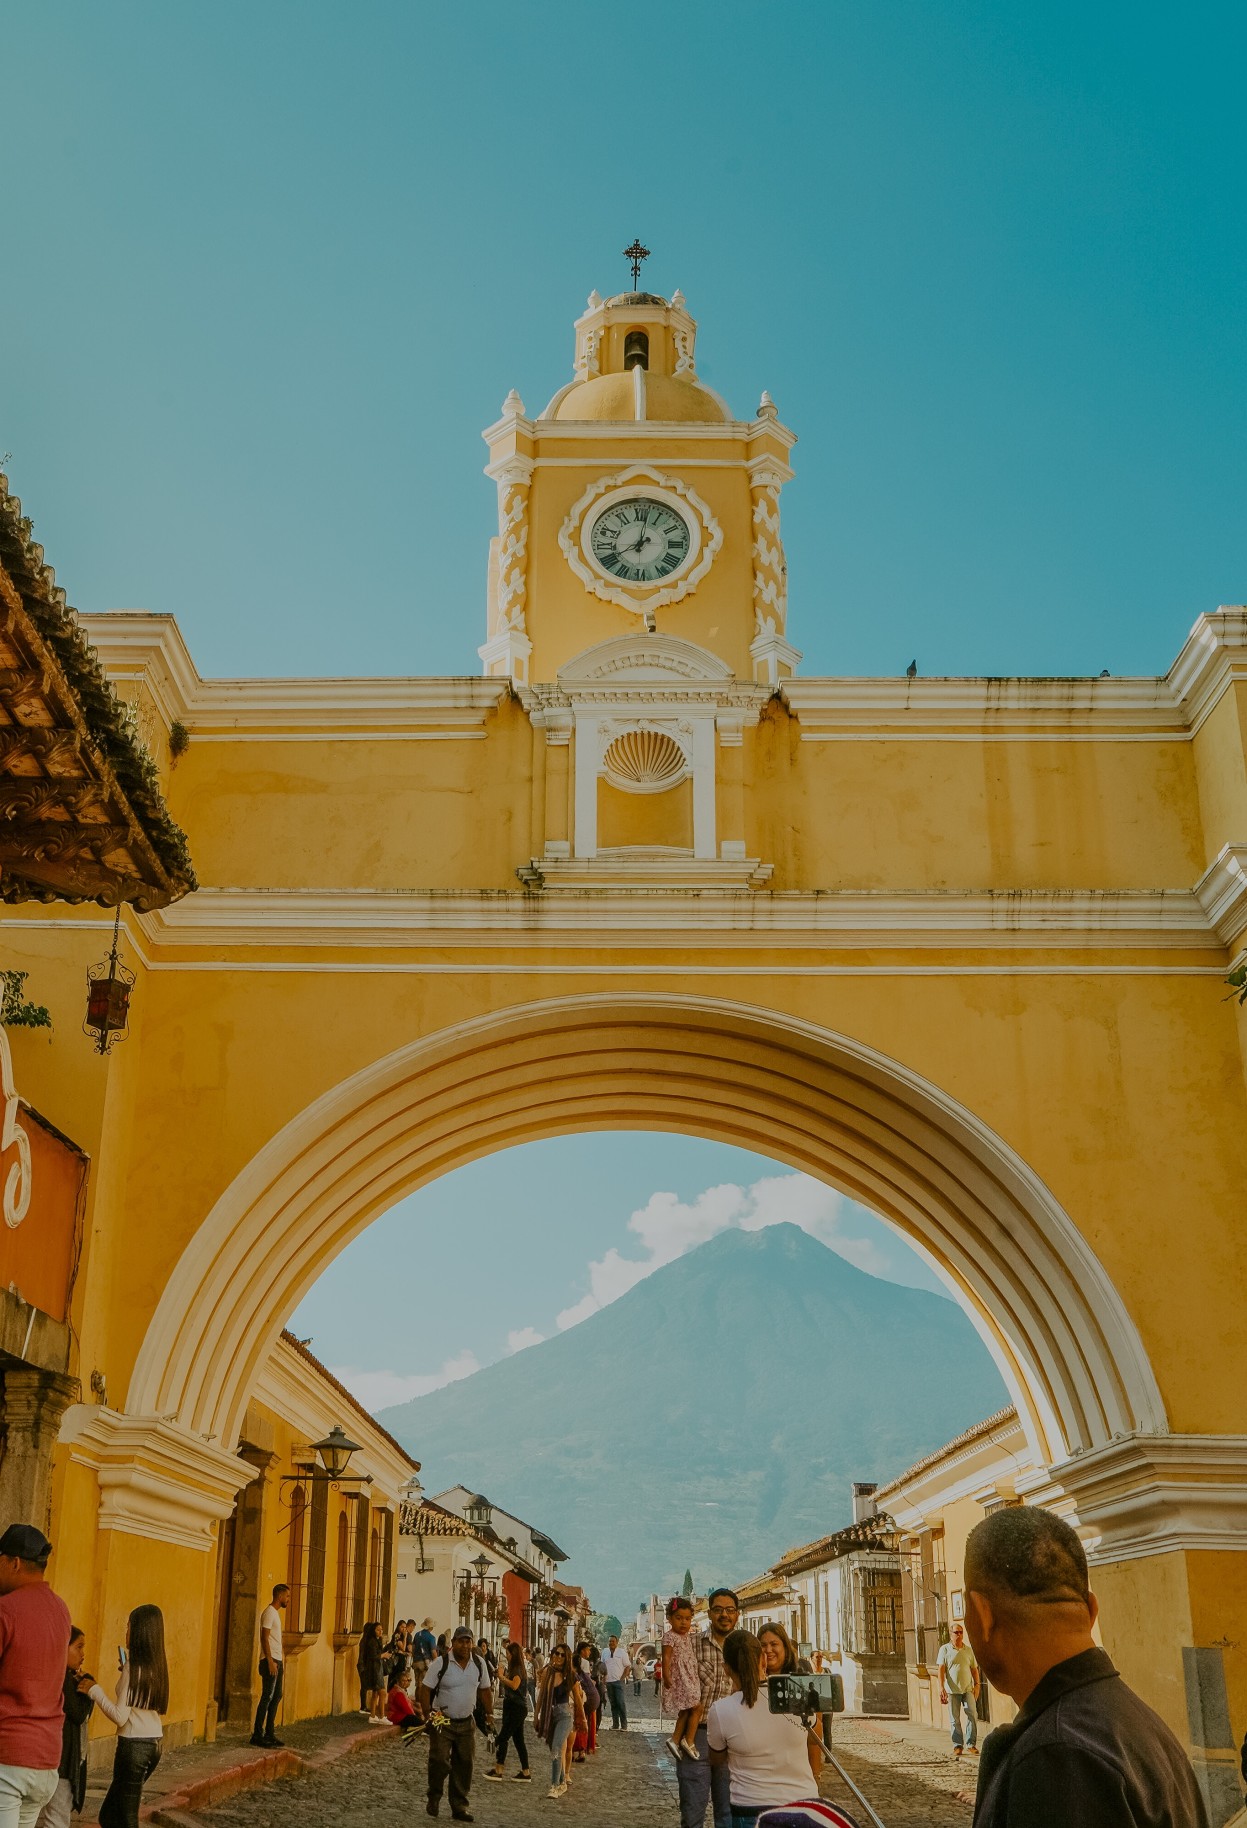 Yellow archway in downtown Antigua, Guatemala